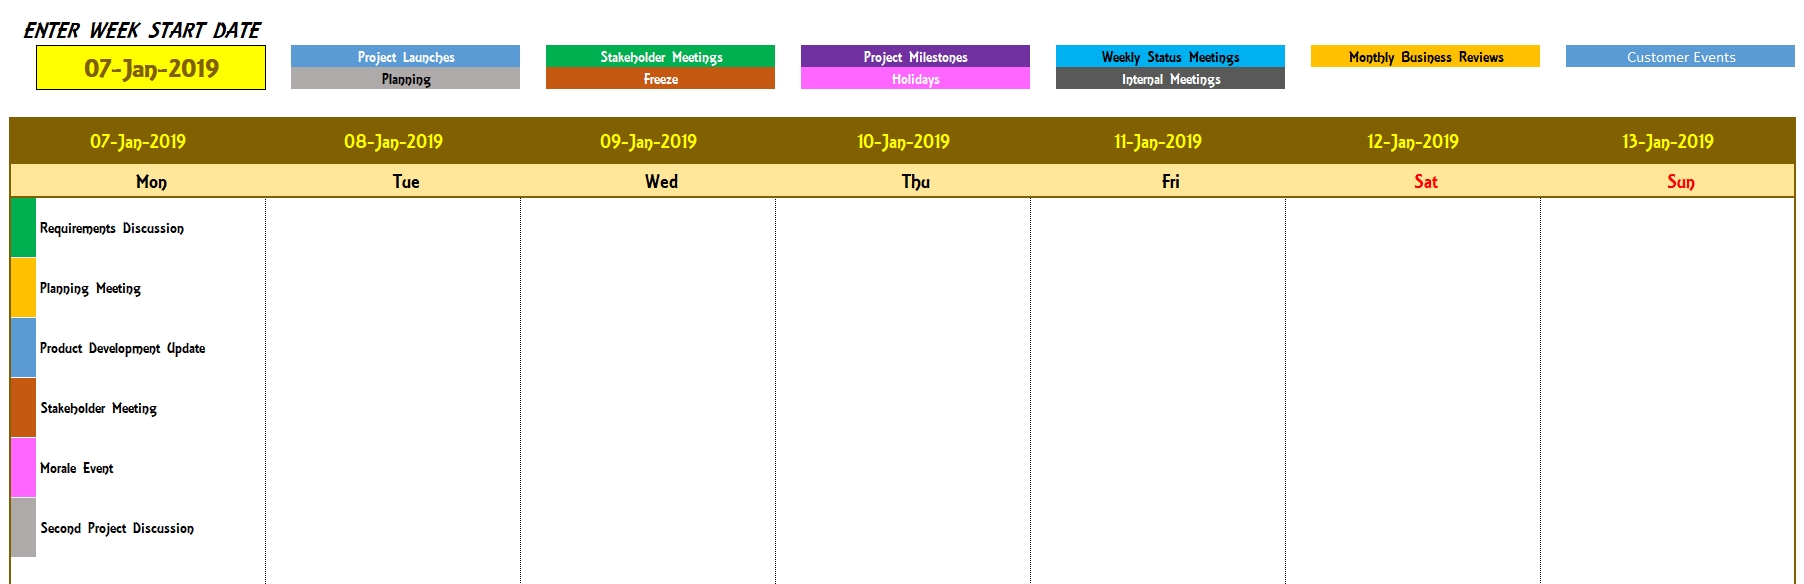 Excel Calendar Template - Excel Calendar 2019, 2020 Or Any Year inside Annual Event Calendar Template Excel